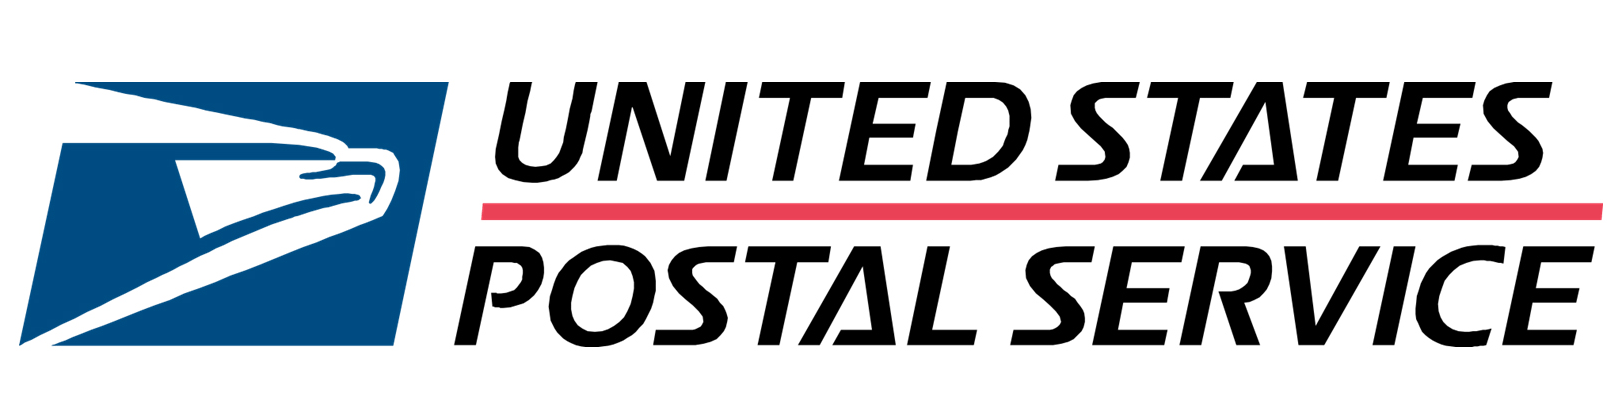 2018 USPS Logo - US Post Office Holidays 2018